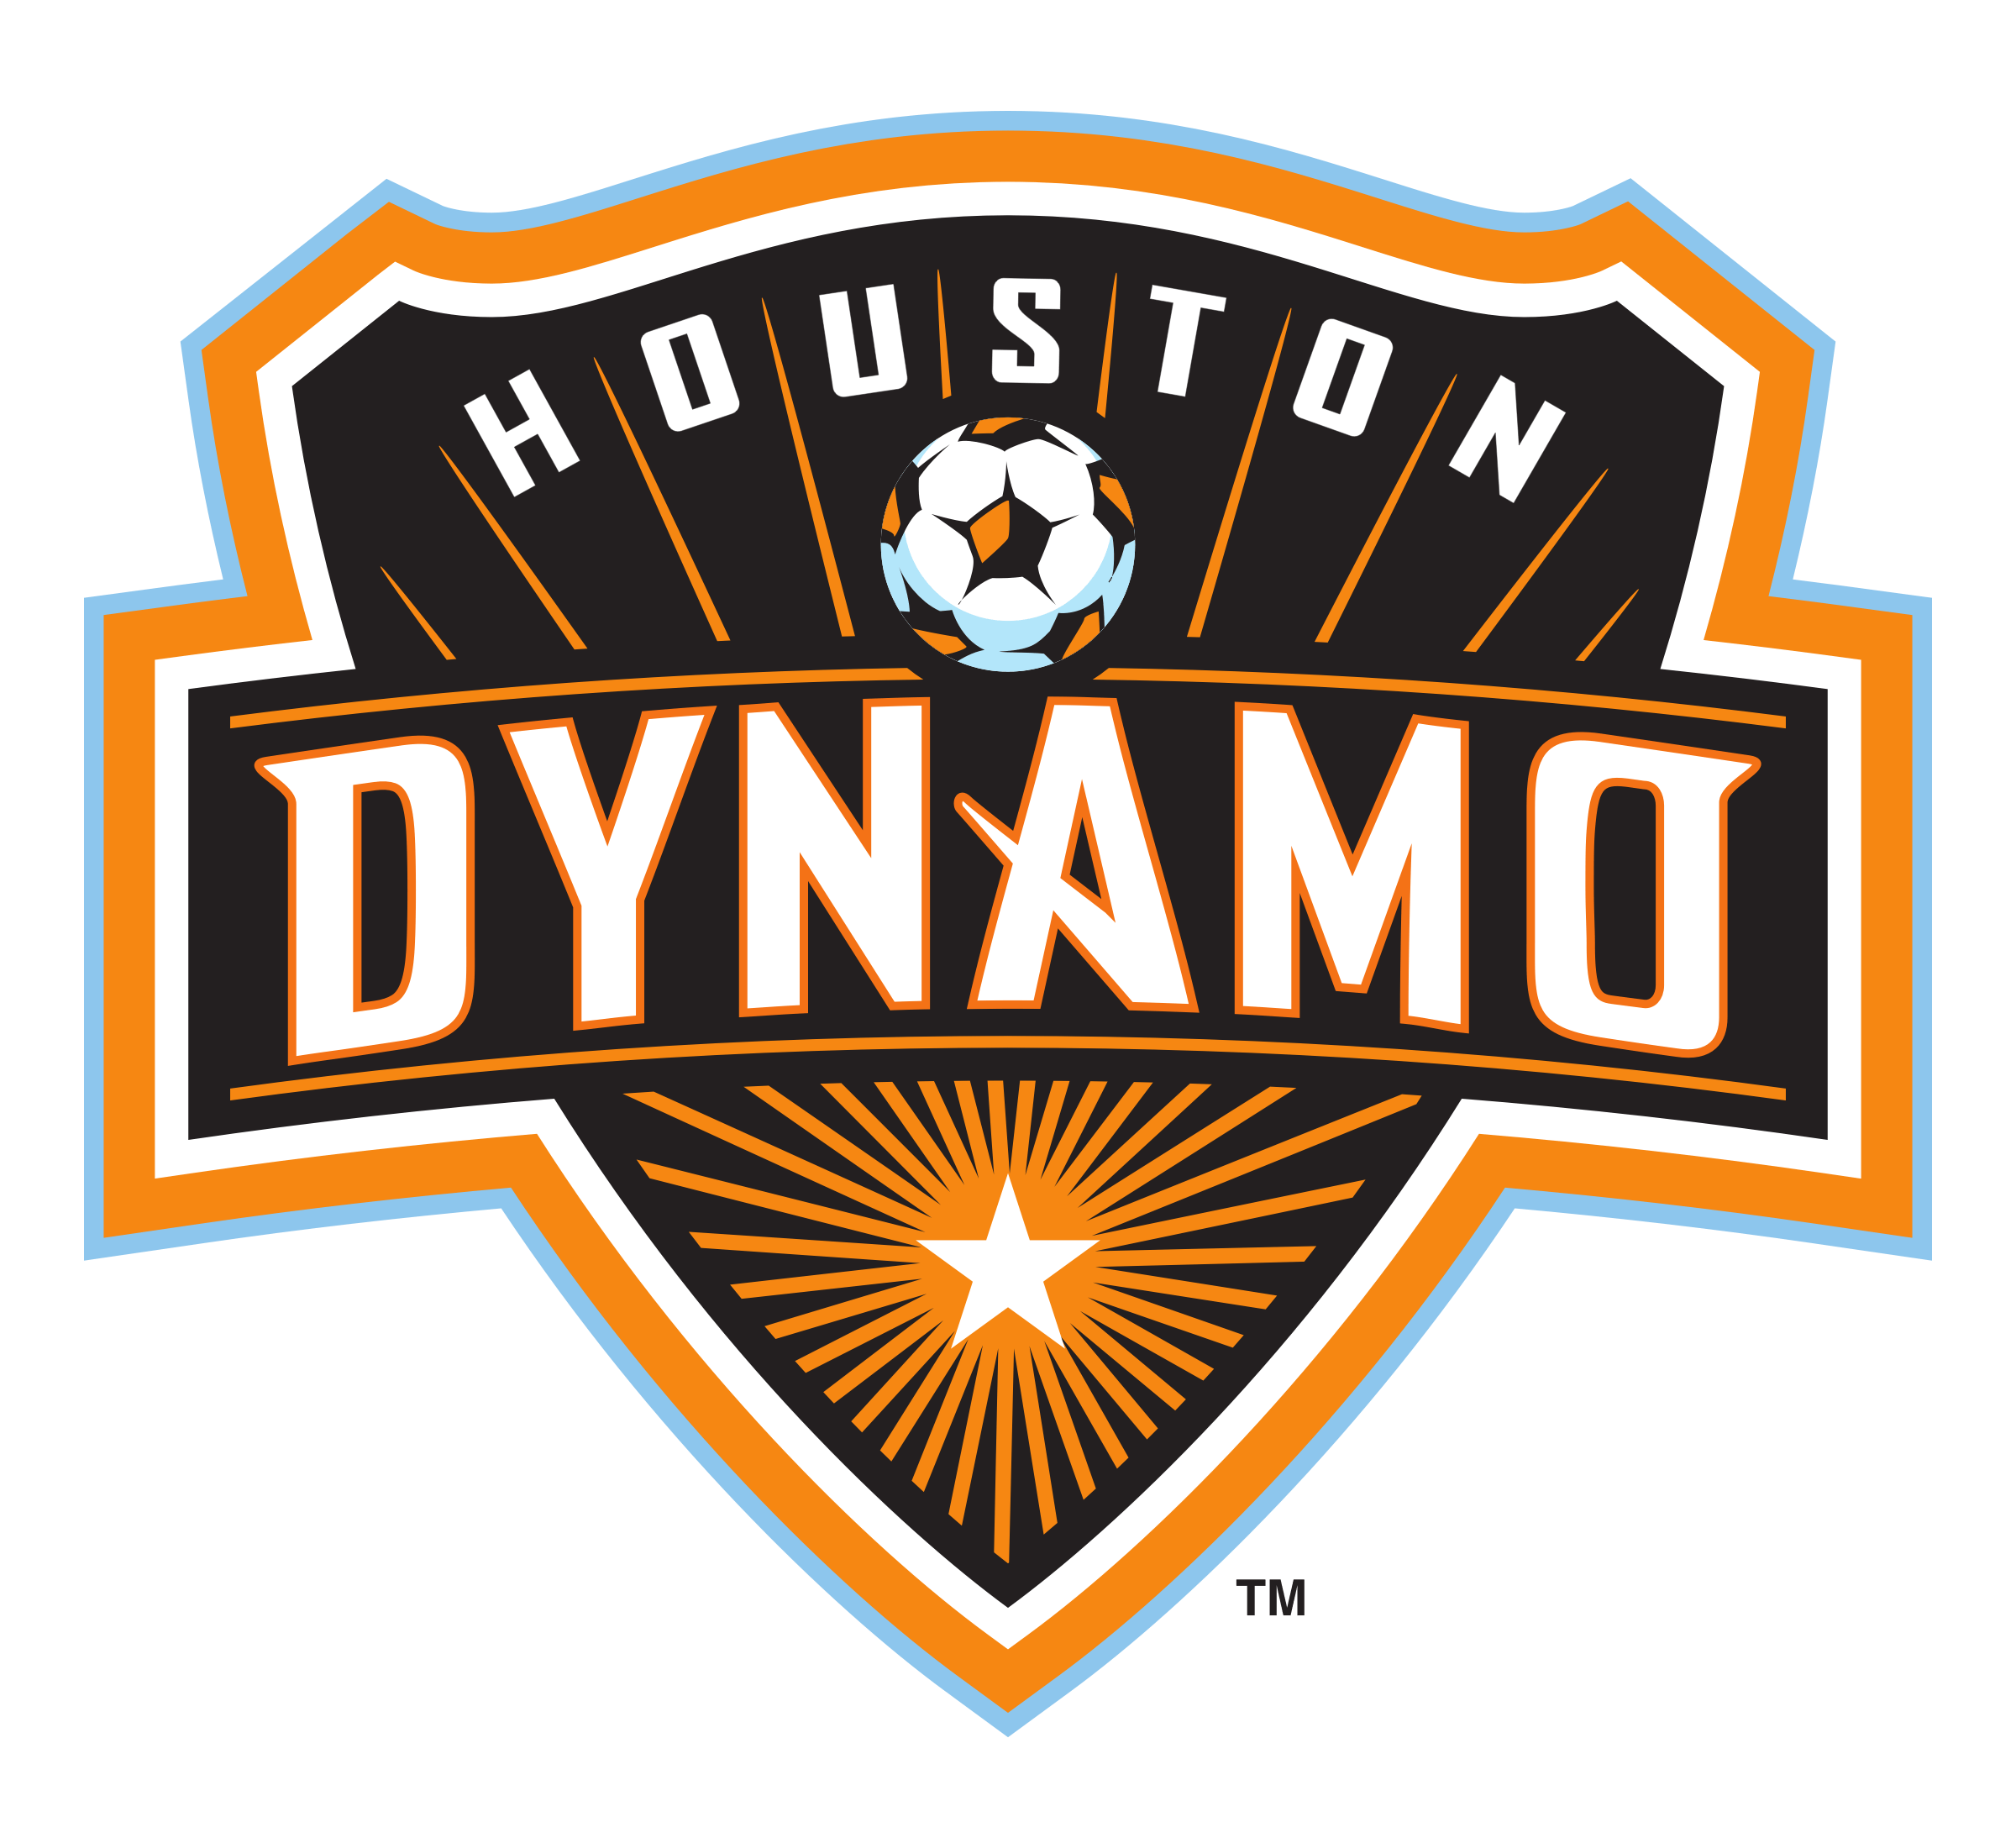 Dynamo Logo - Houston Dynamo Logo PNG Transparent & SVG Vector